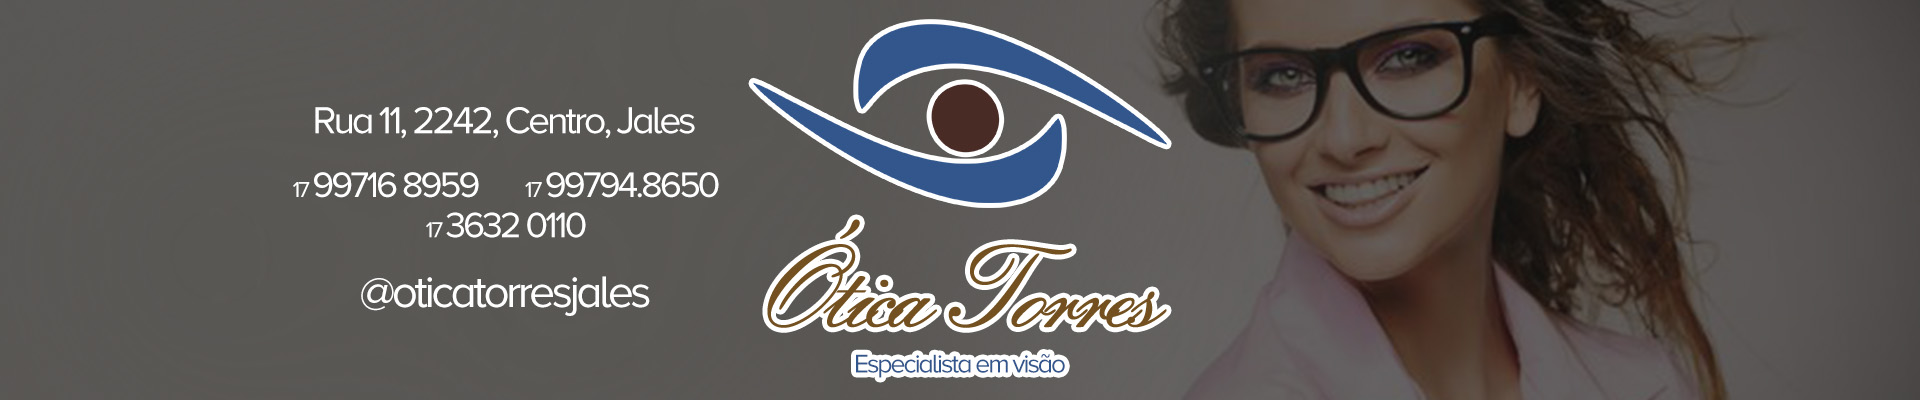 Ótica Torres